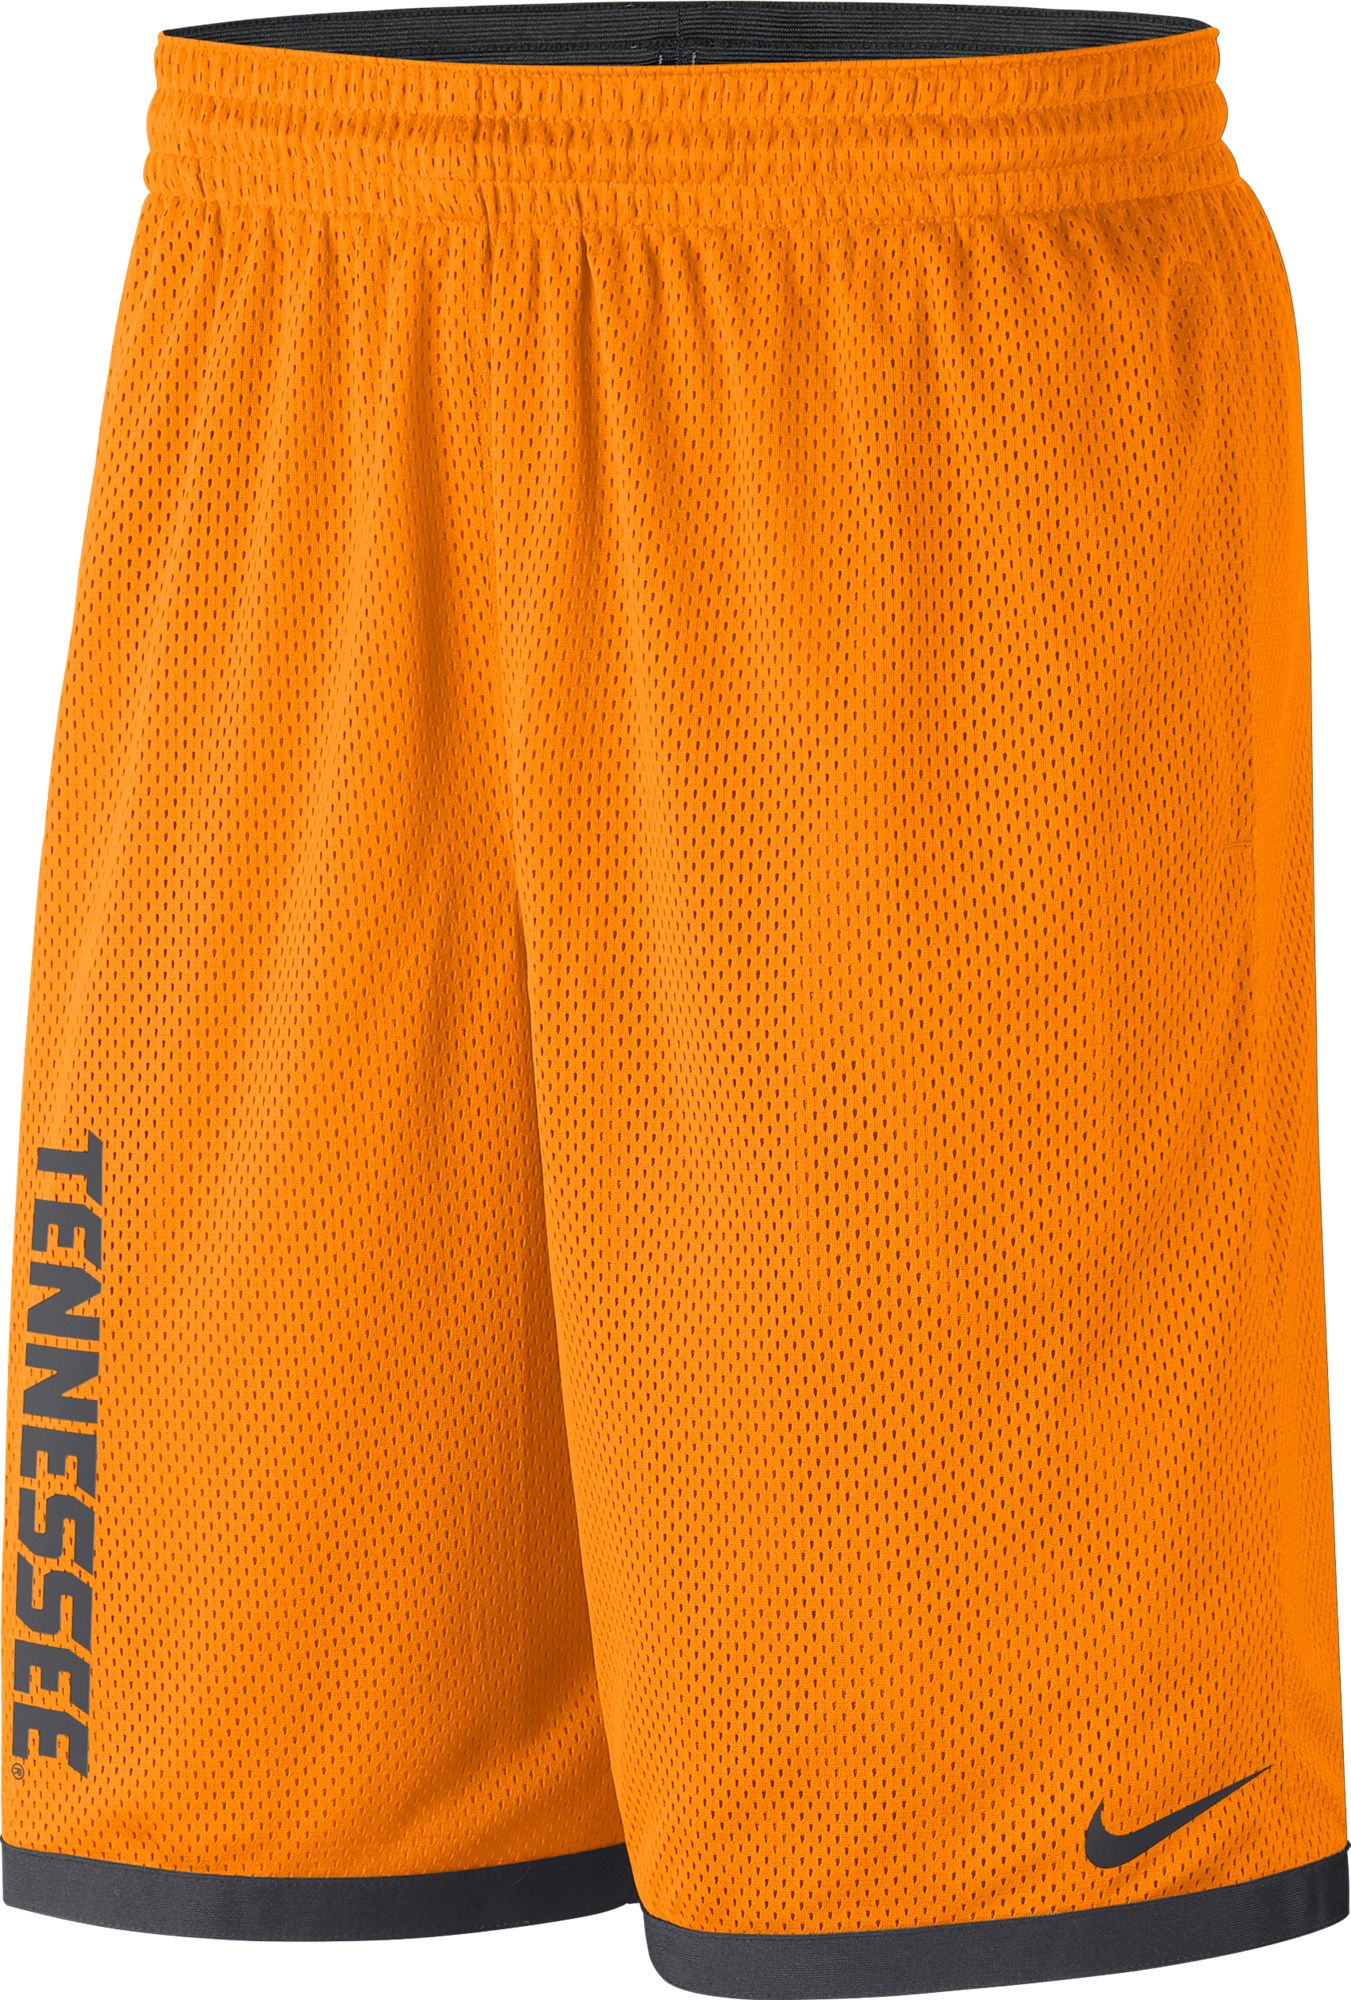 mens orange basketball shorts